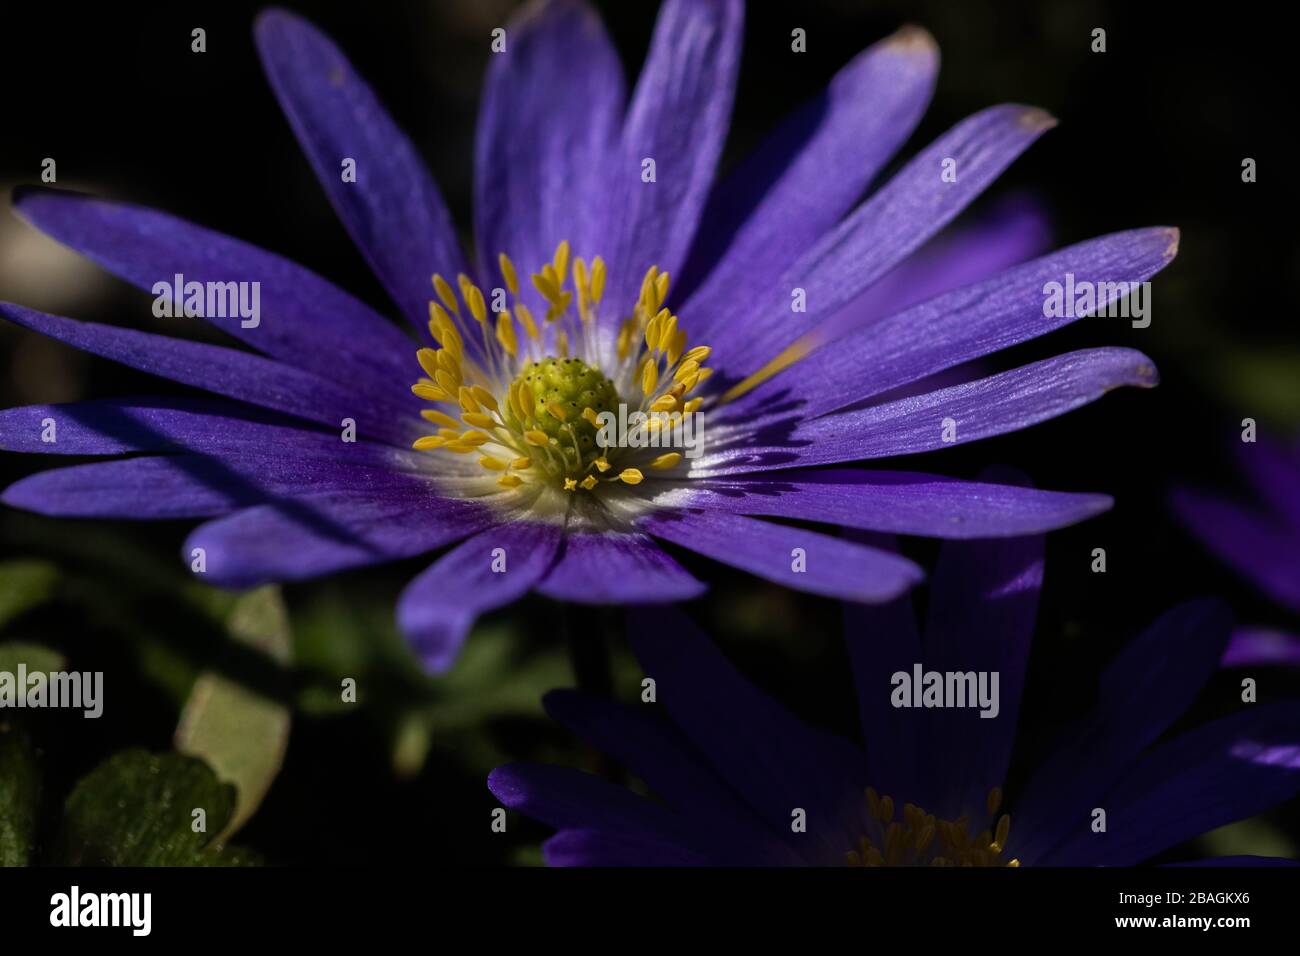 Anemone Blanda close up. Stock Photo